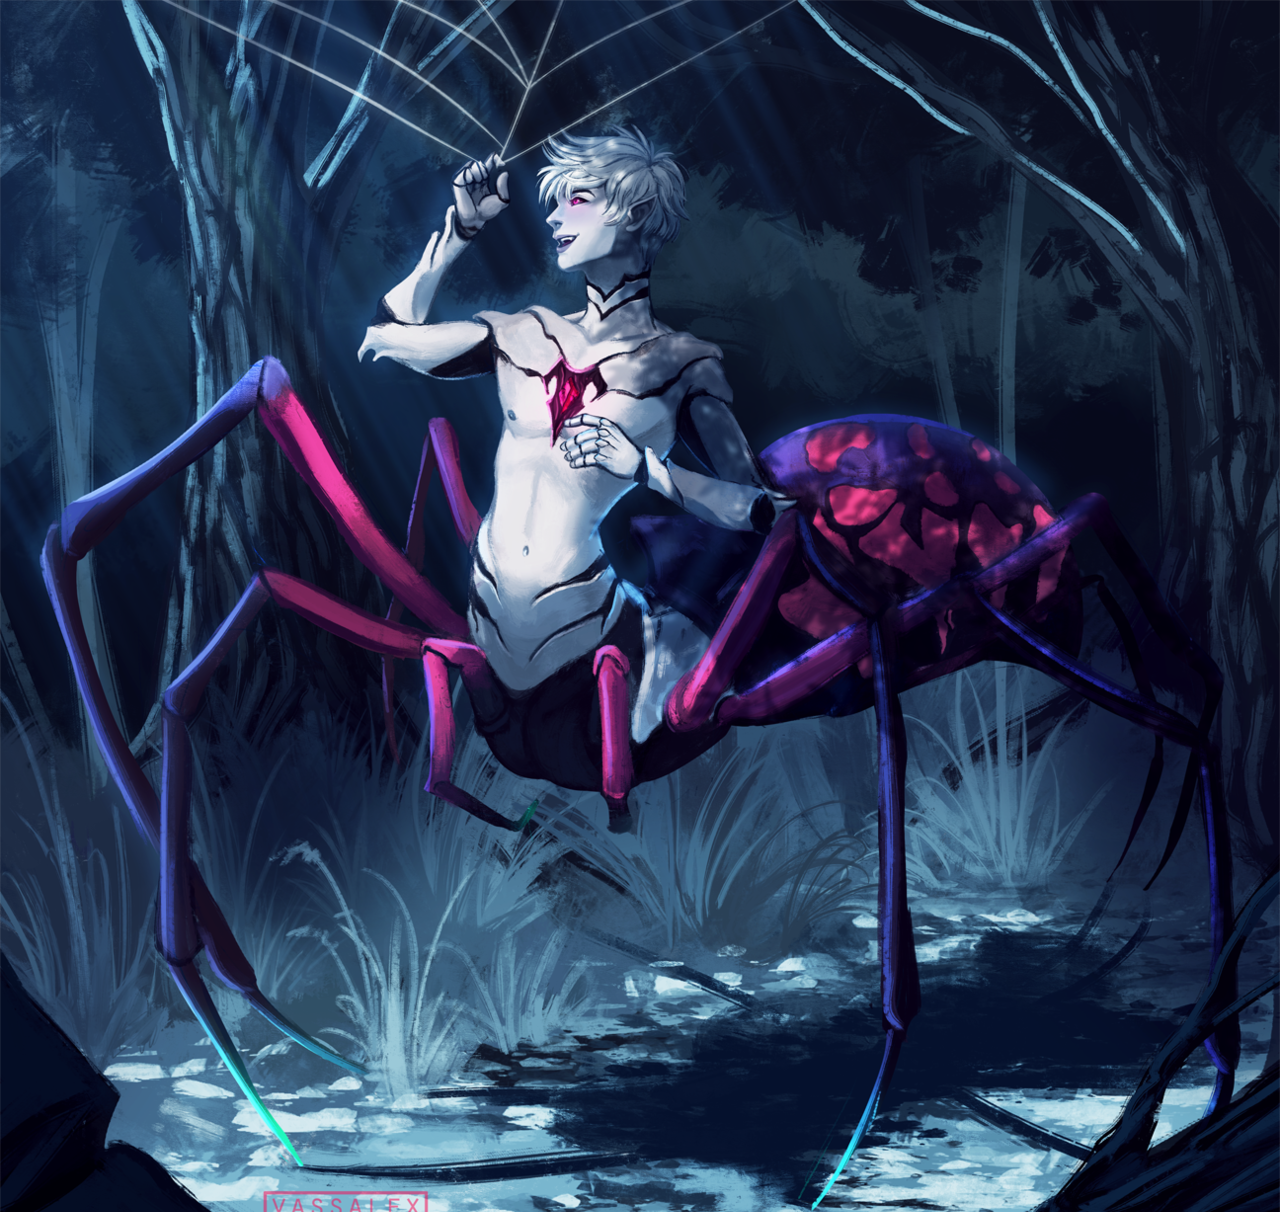 Model: Spider Wolf is a Zoan-type Devil Fruit that allows its wielder to tr...